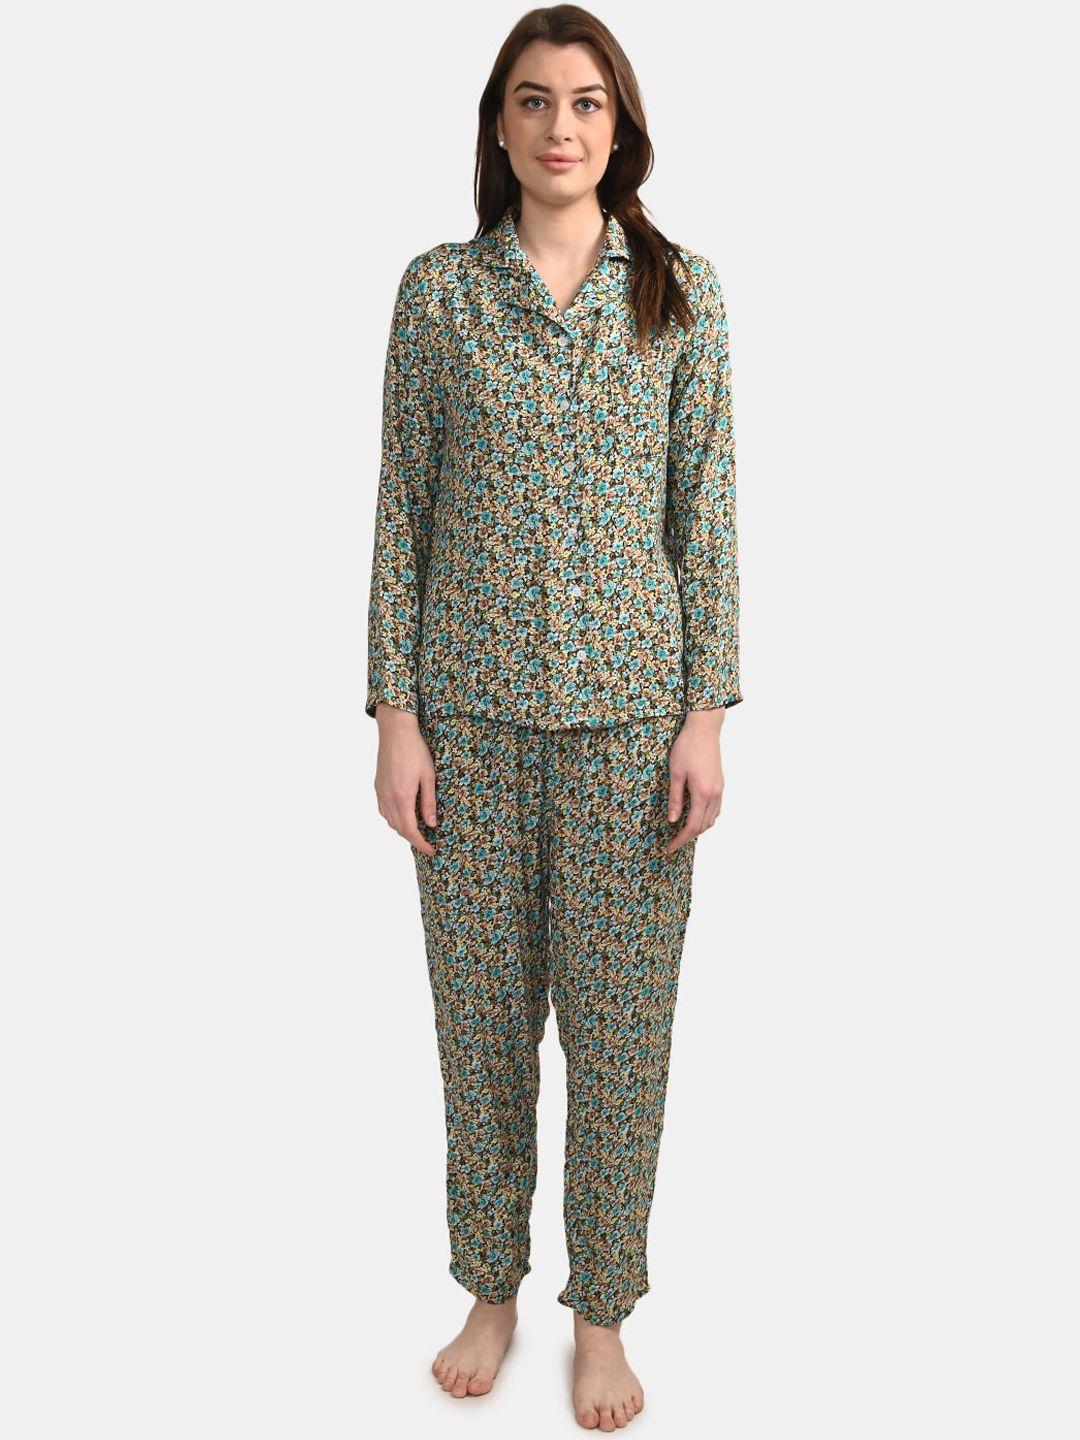 buckleup-women-multicoloured-printed-night-suit